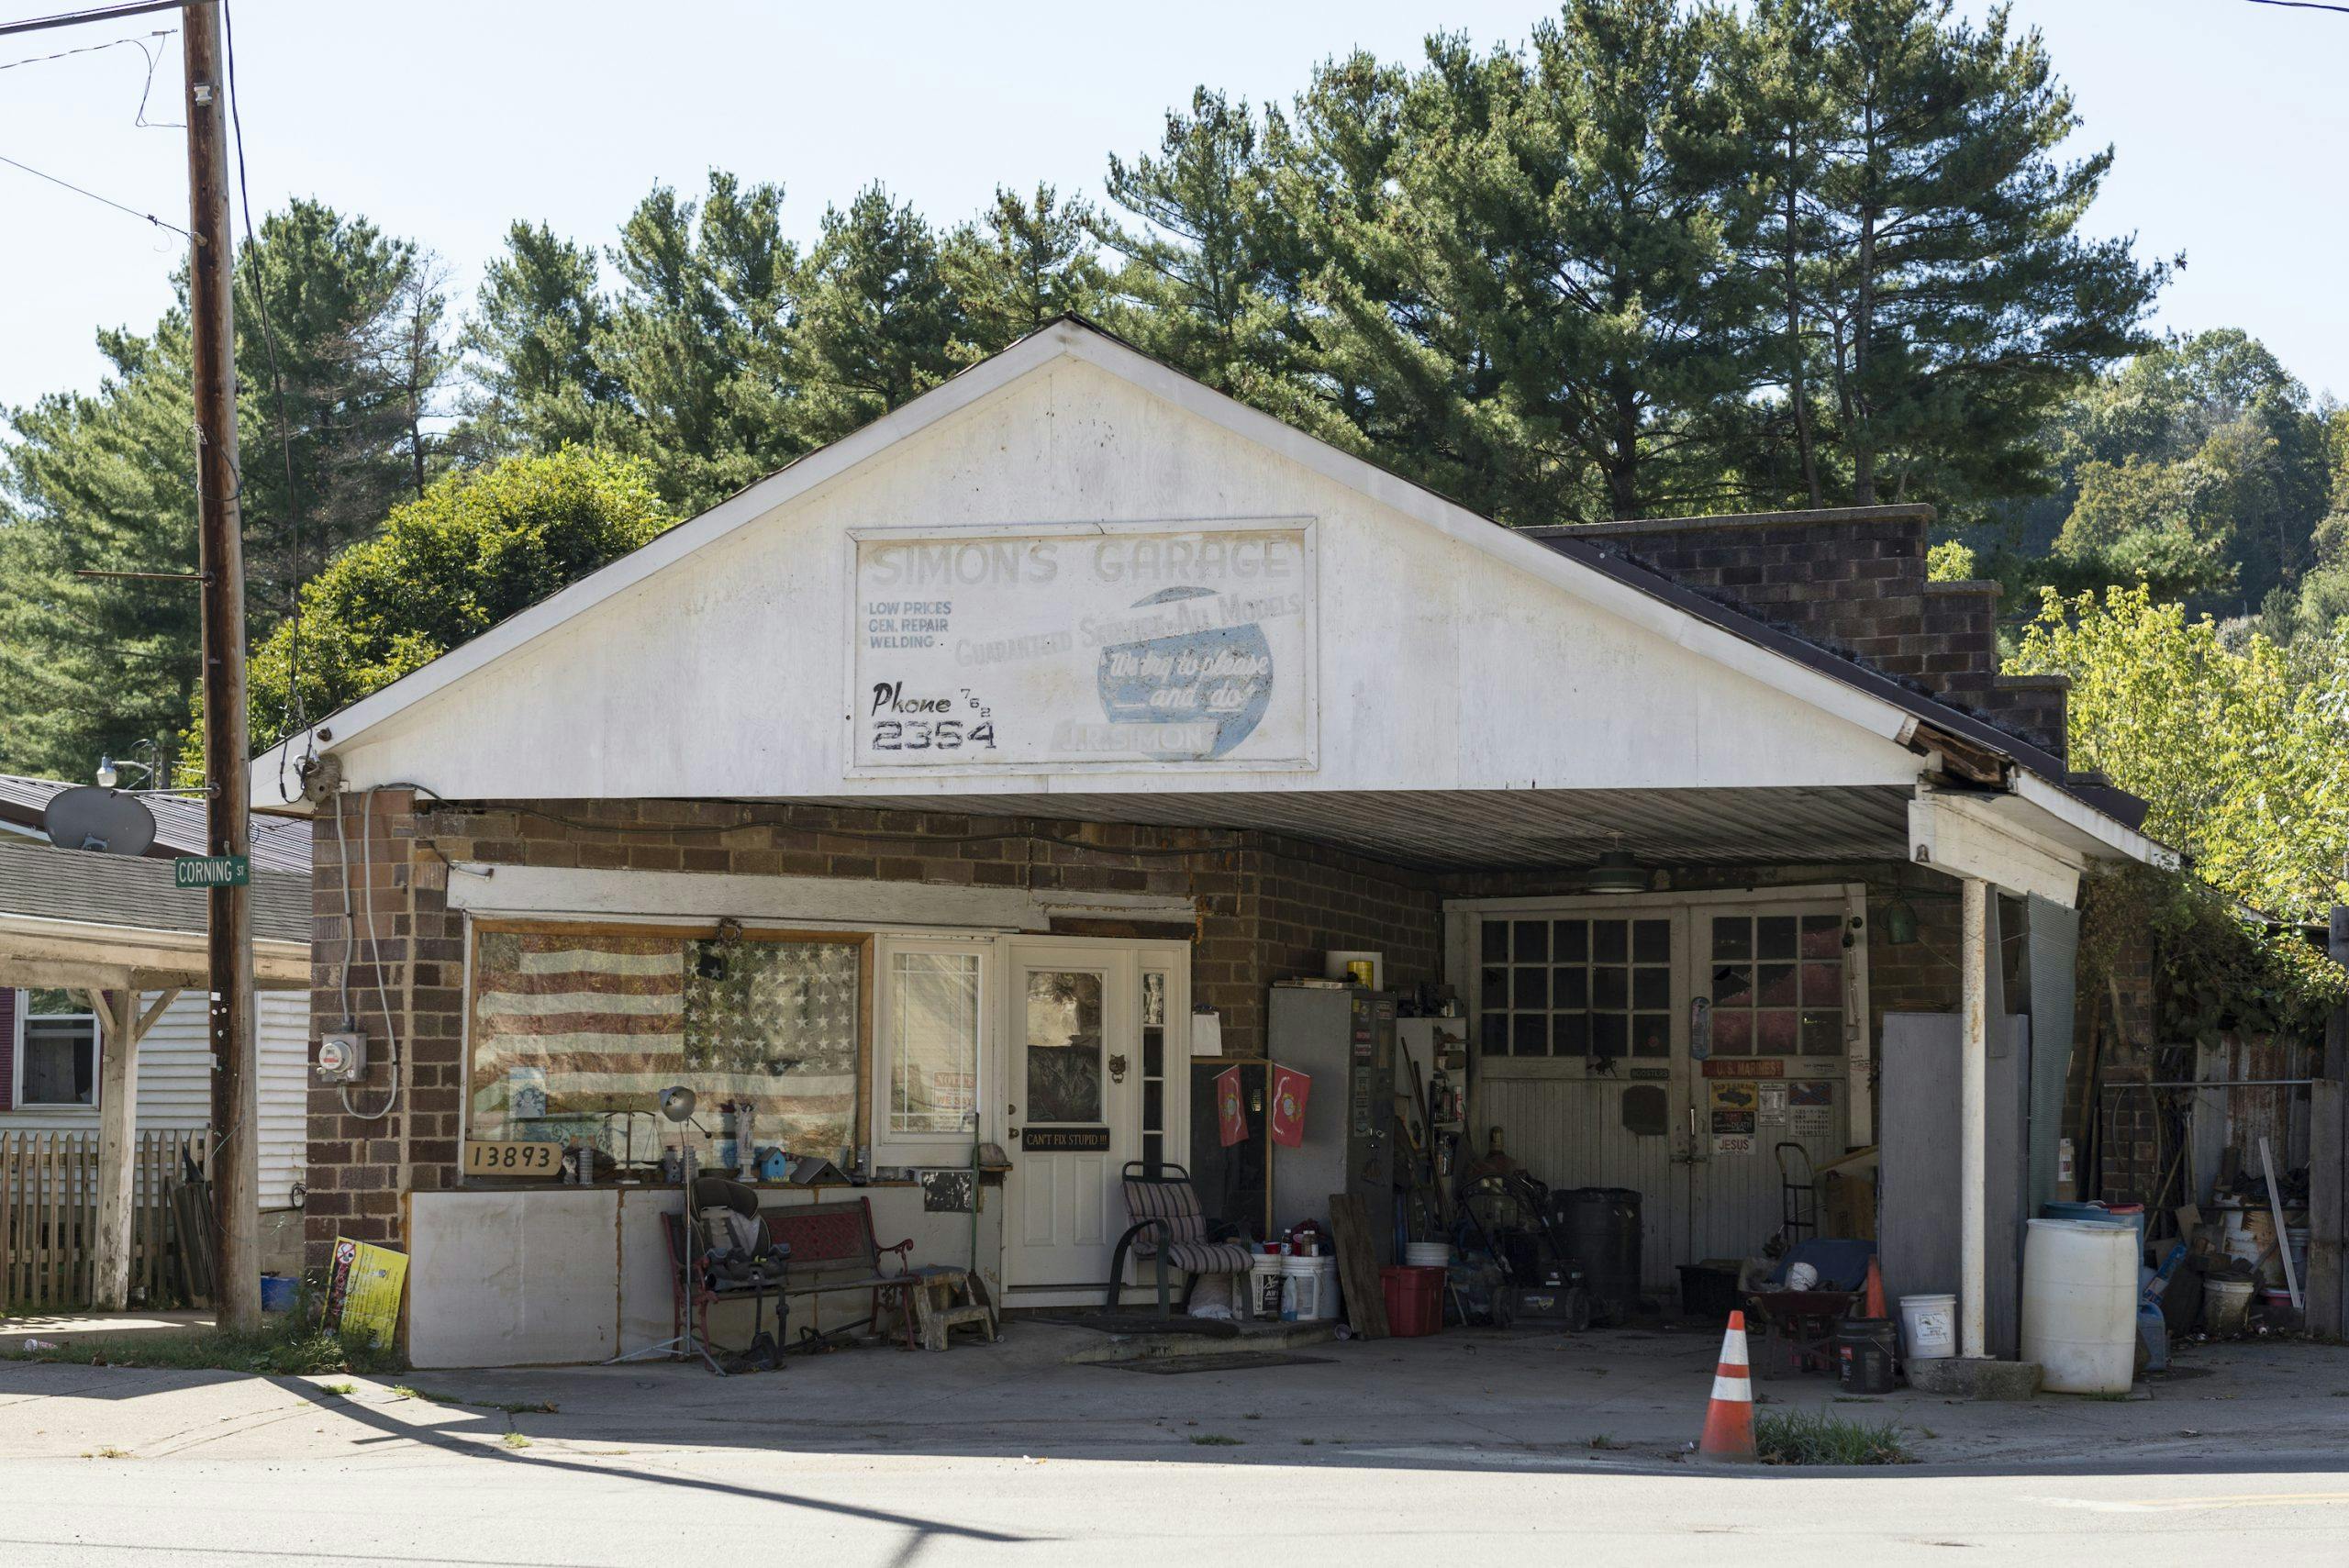 Rural Ohio Simons Garage